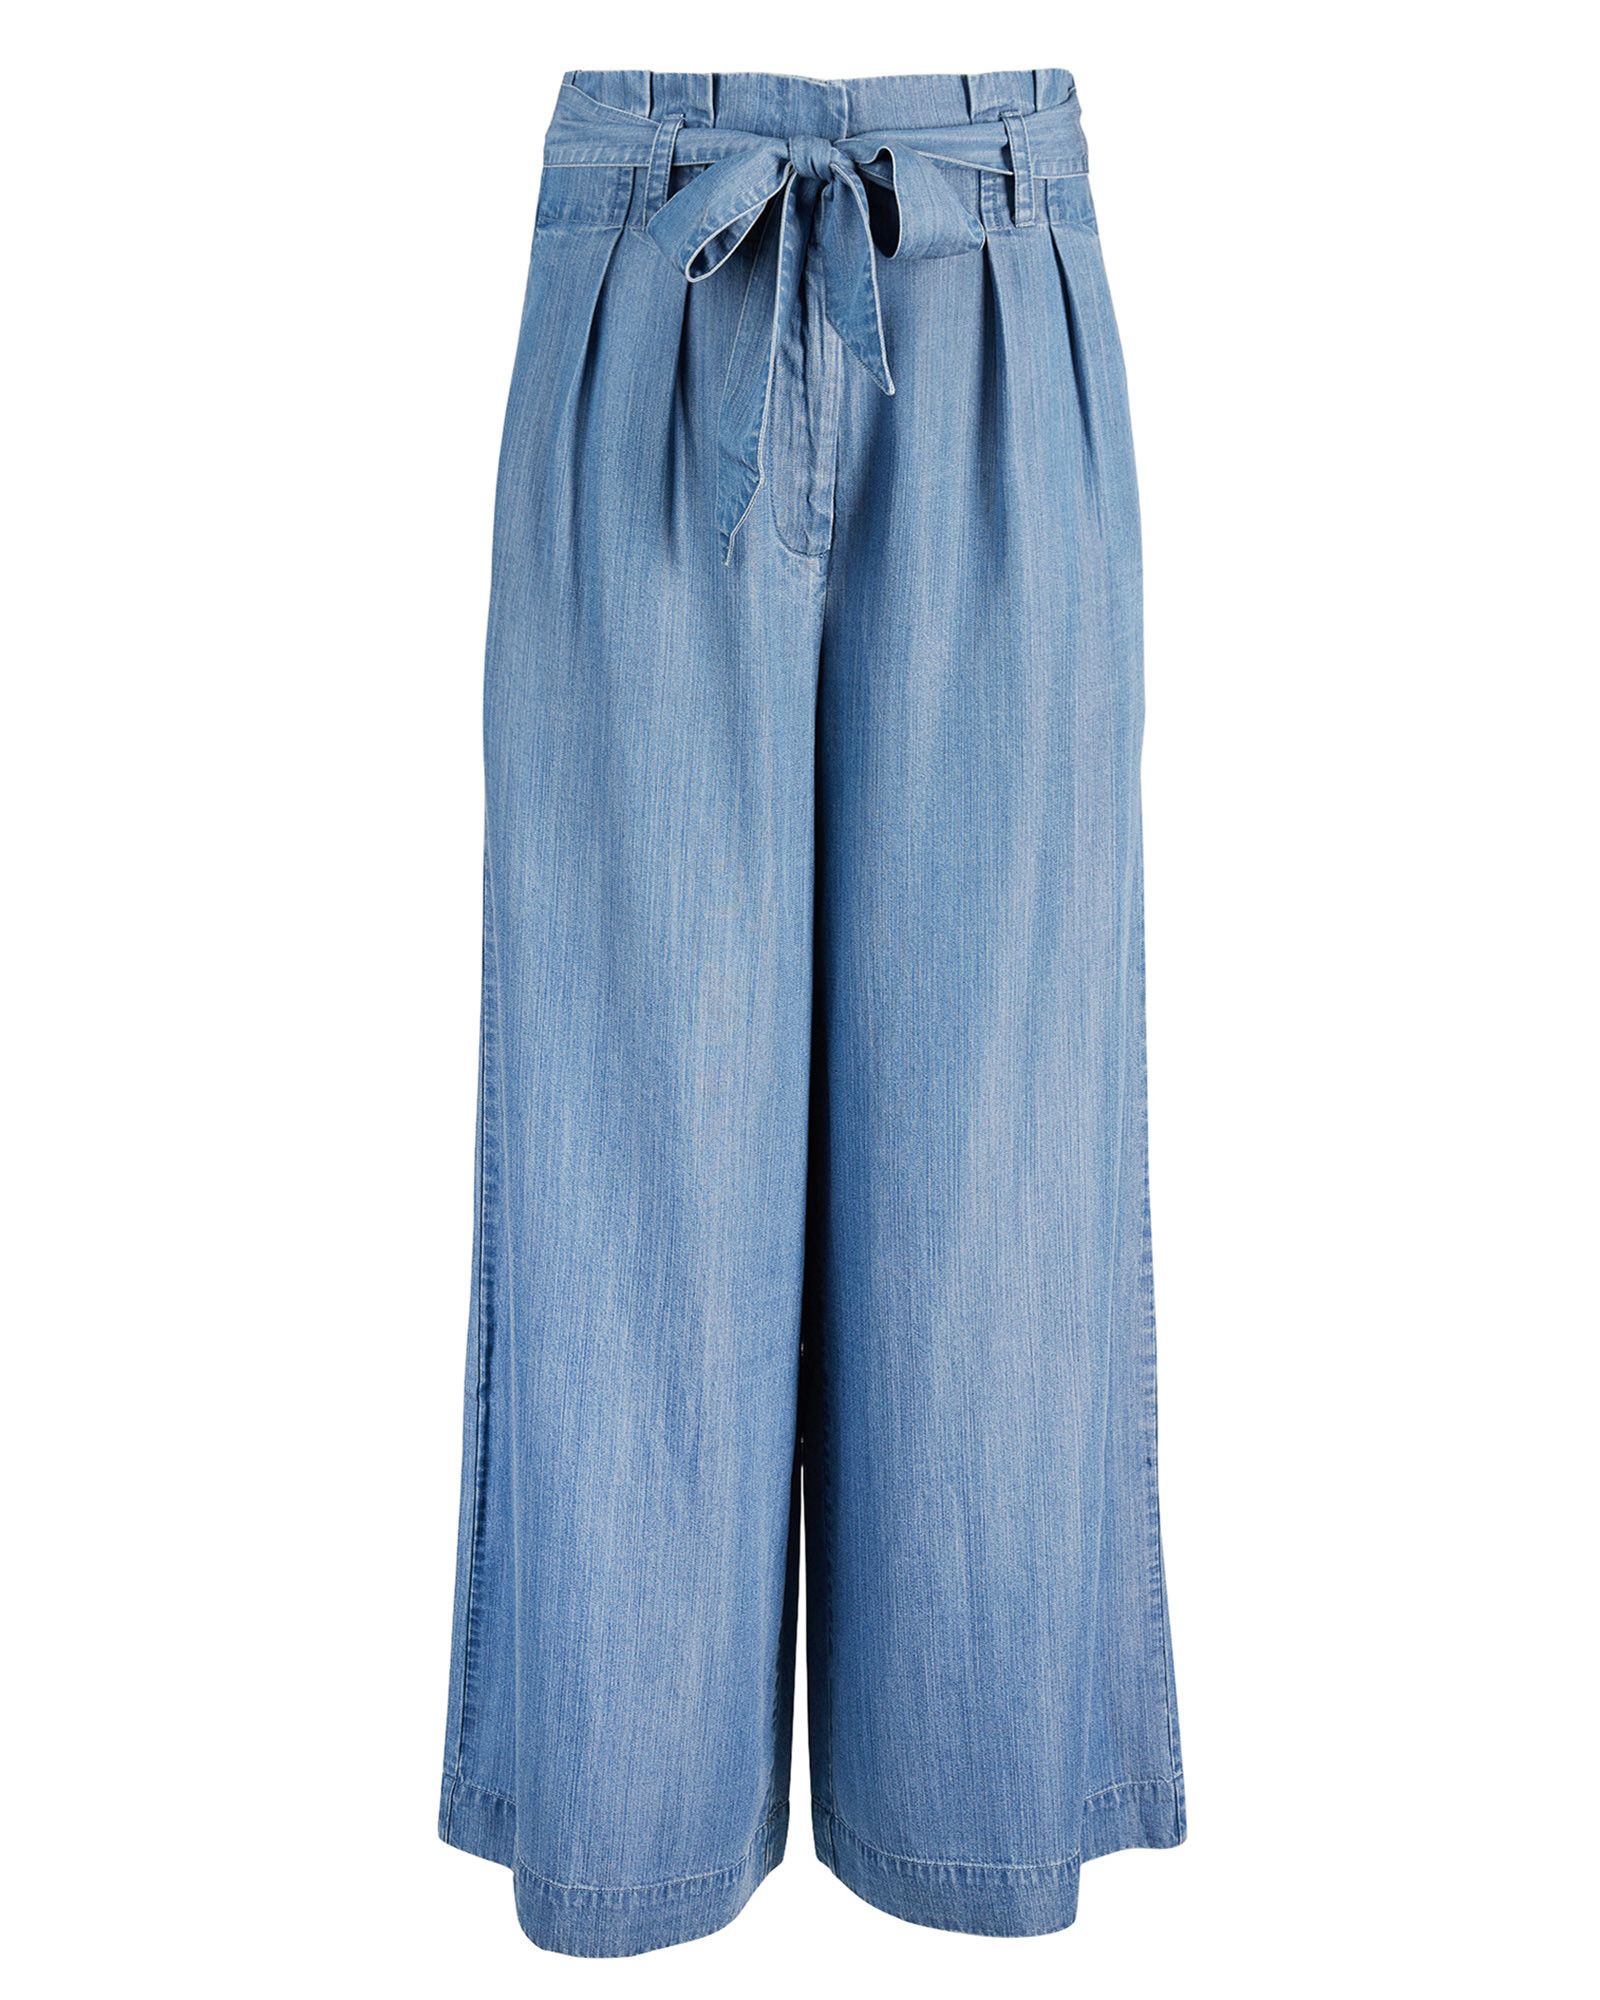 Peach Pants - Paperbag Waist Pants - Women's Cropped Pants - Lulus